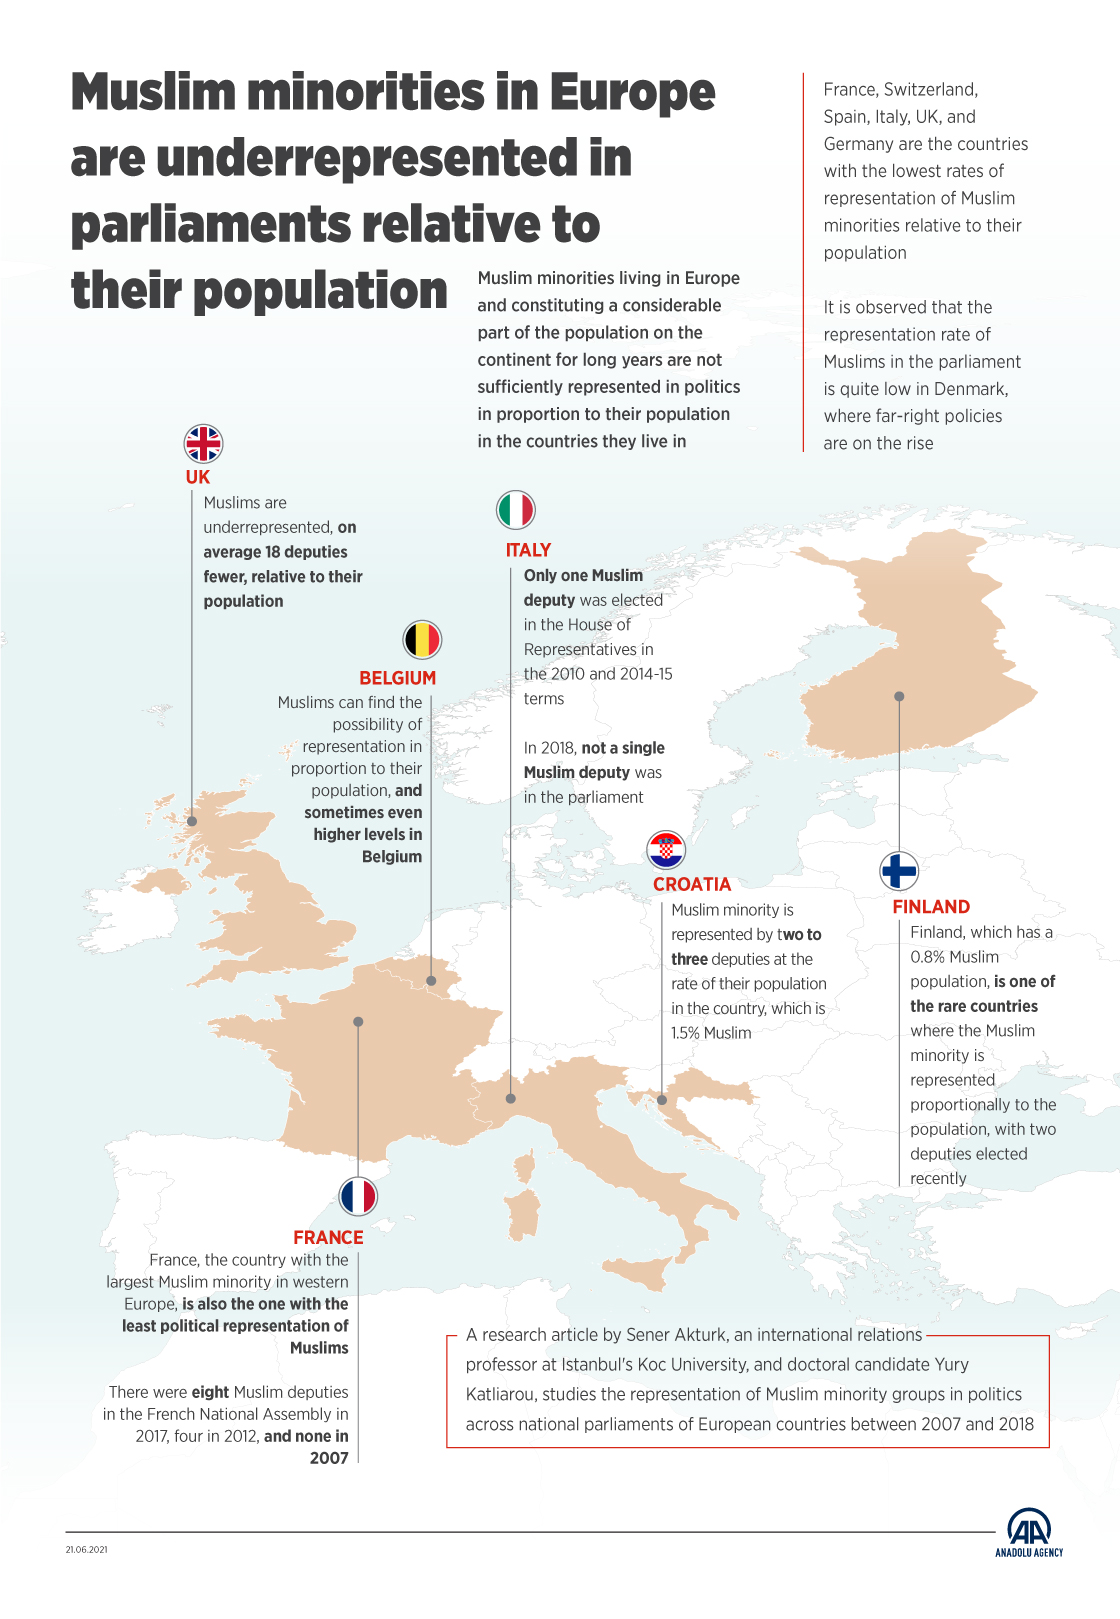 Muslim minorities in Europe are underrepresented in parliaments relative to their population